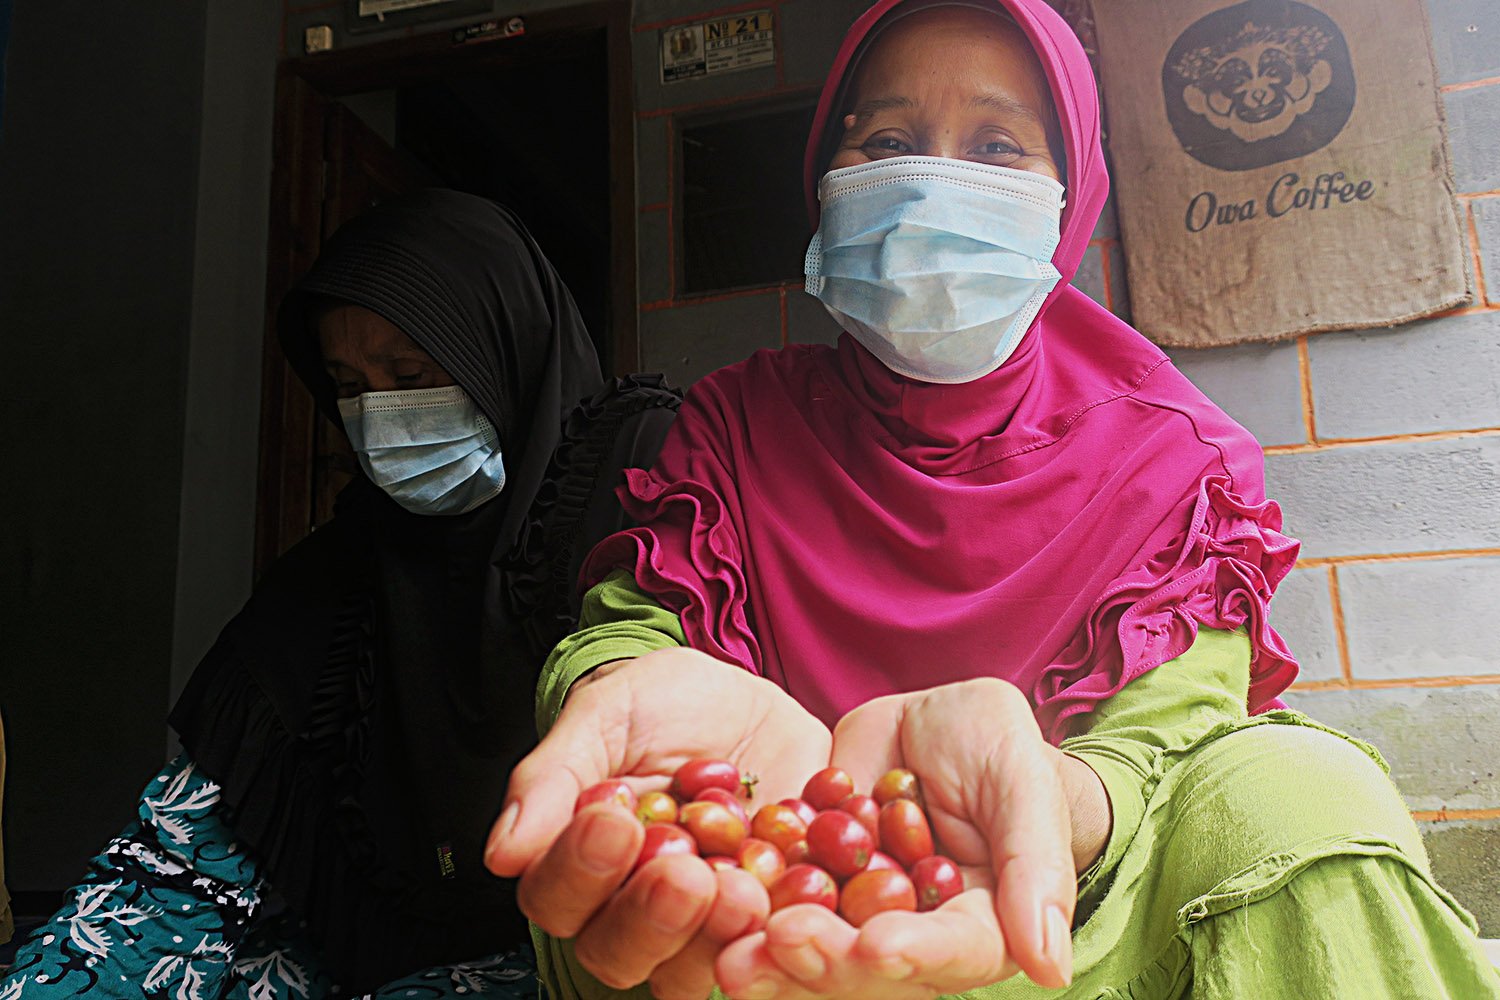 A masked woman displays freshly picked coffee cherries in her hands.